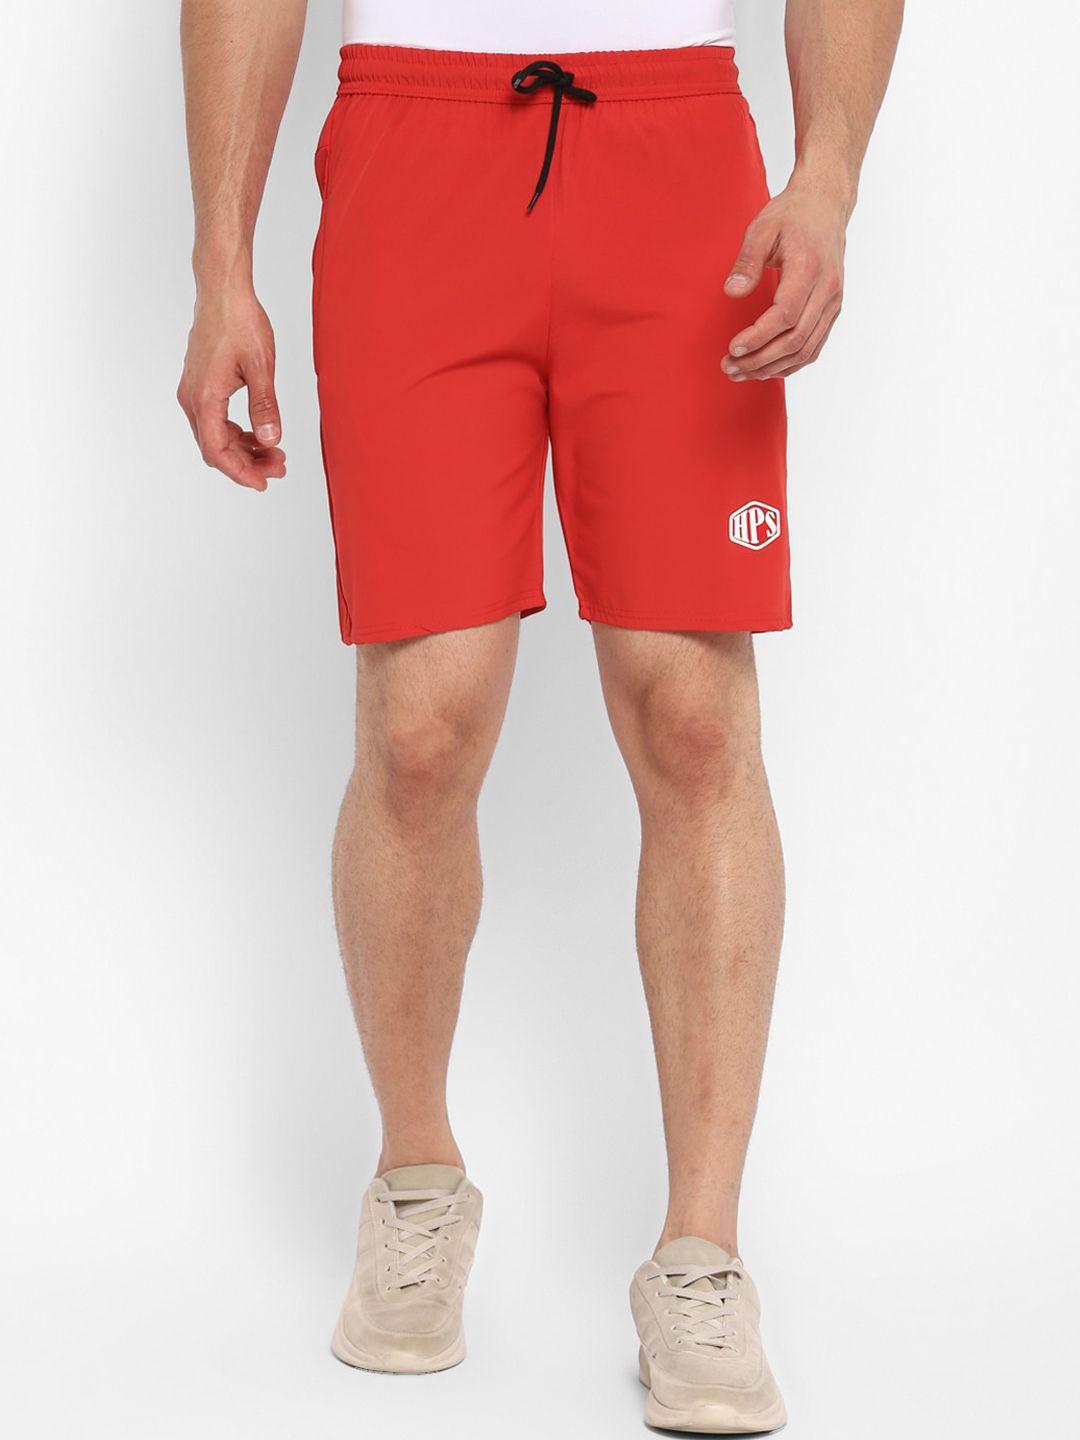 hps sports men red running shorts